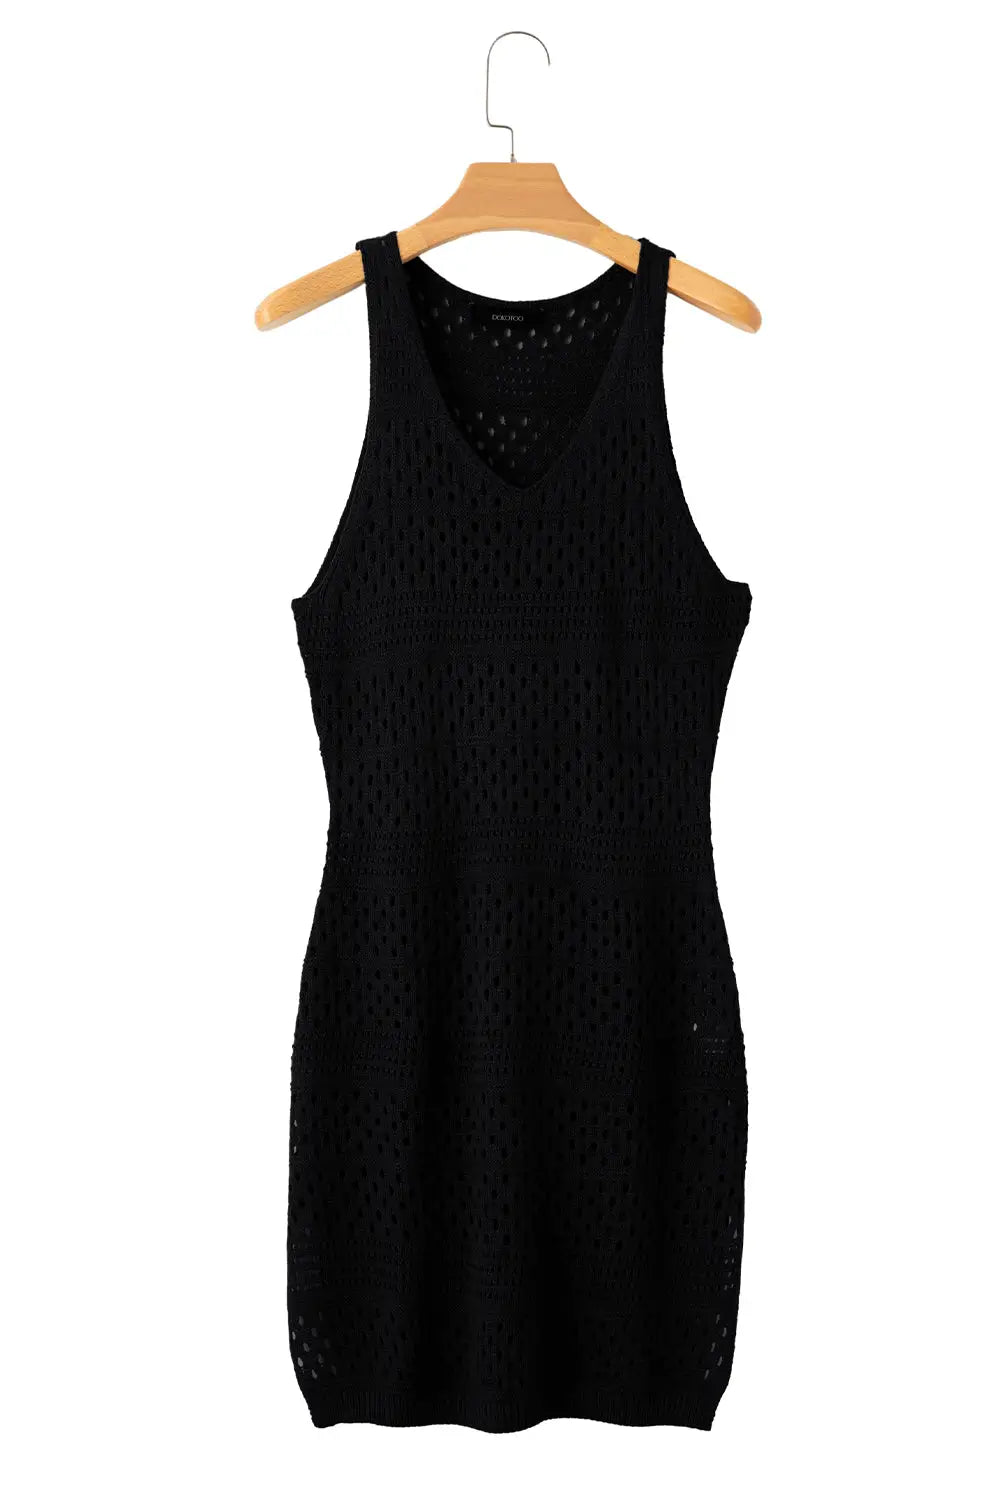 Crochet cover up dress with slits - swimwear